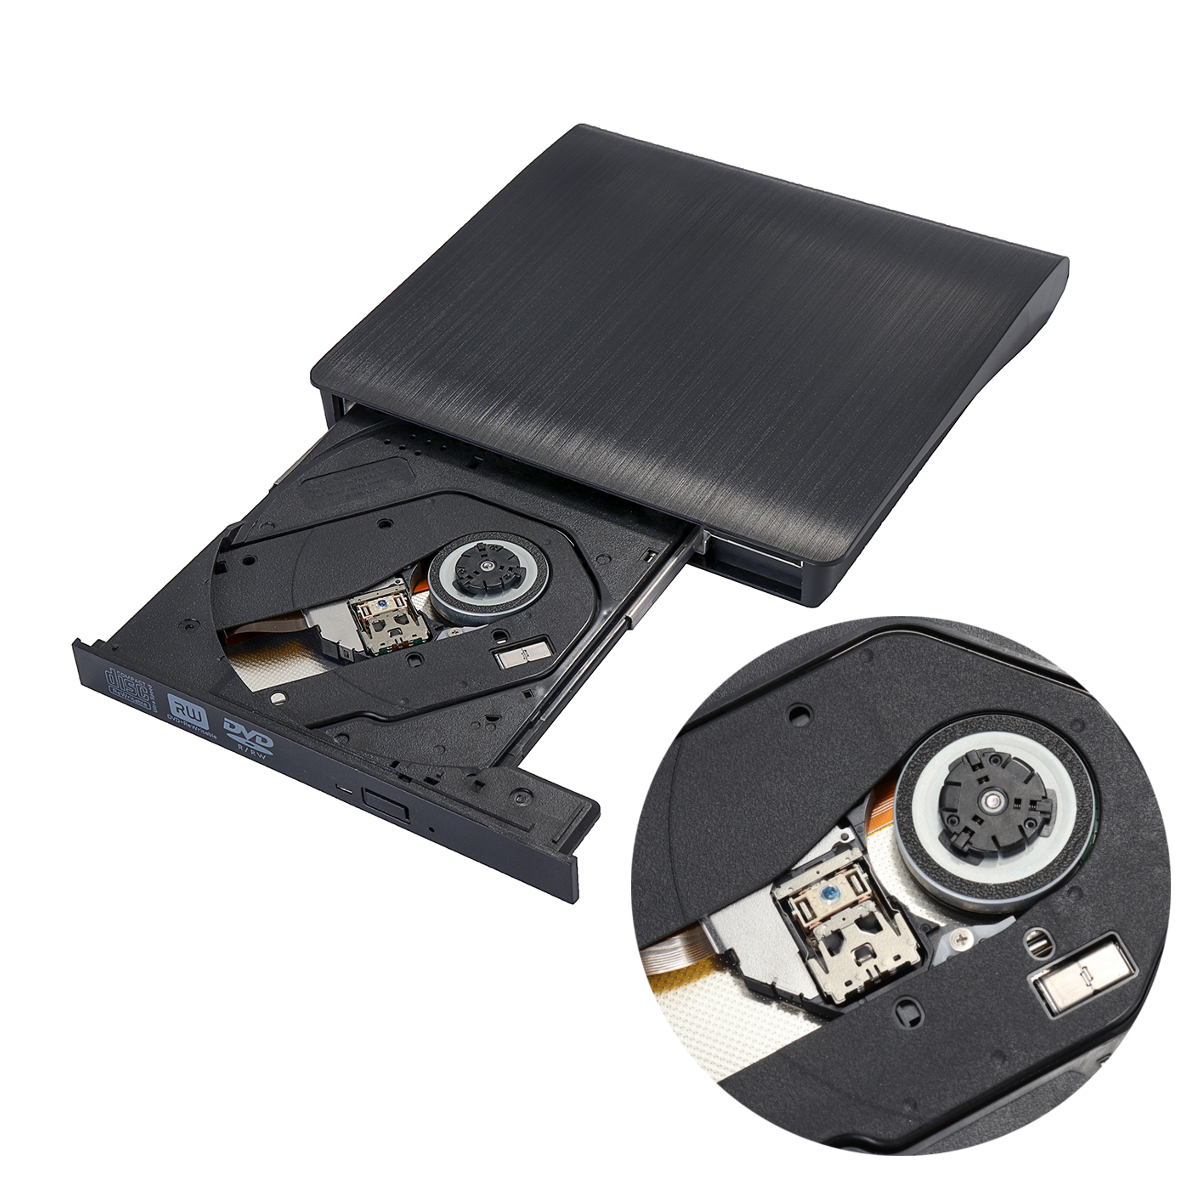 Pop-up External DVD RW CD Writer Drive USB 3.0 Optical Drives Slim Burner Reader Player 8